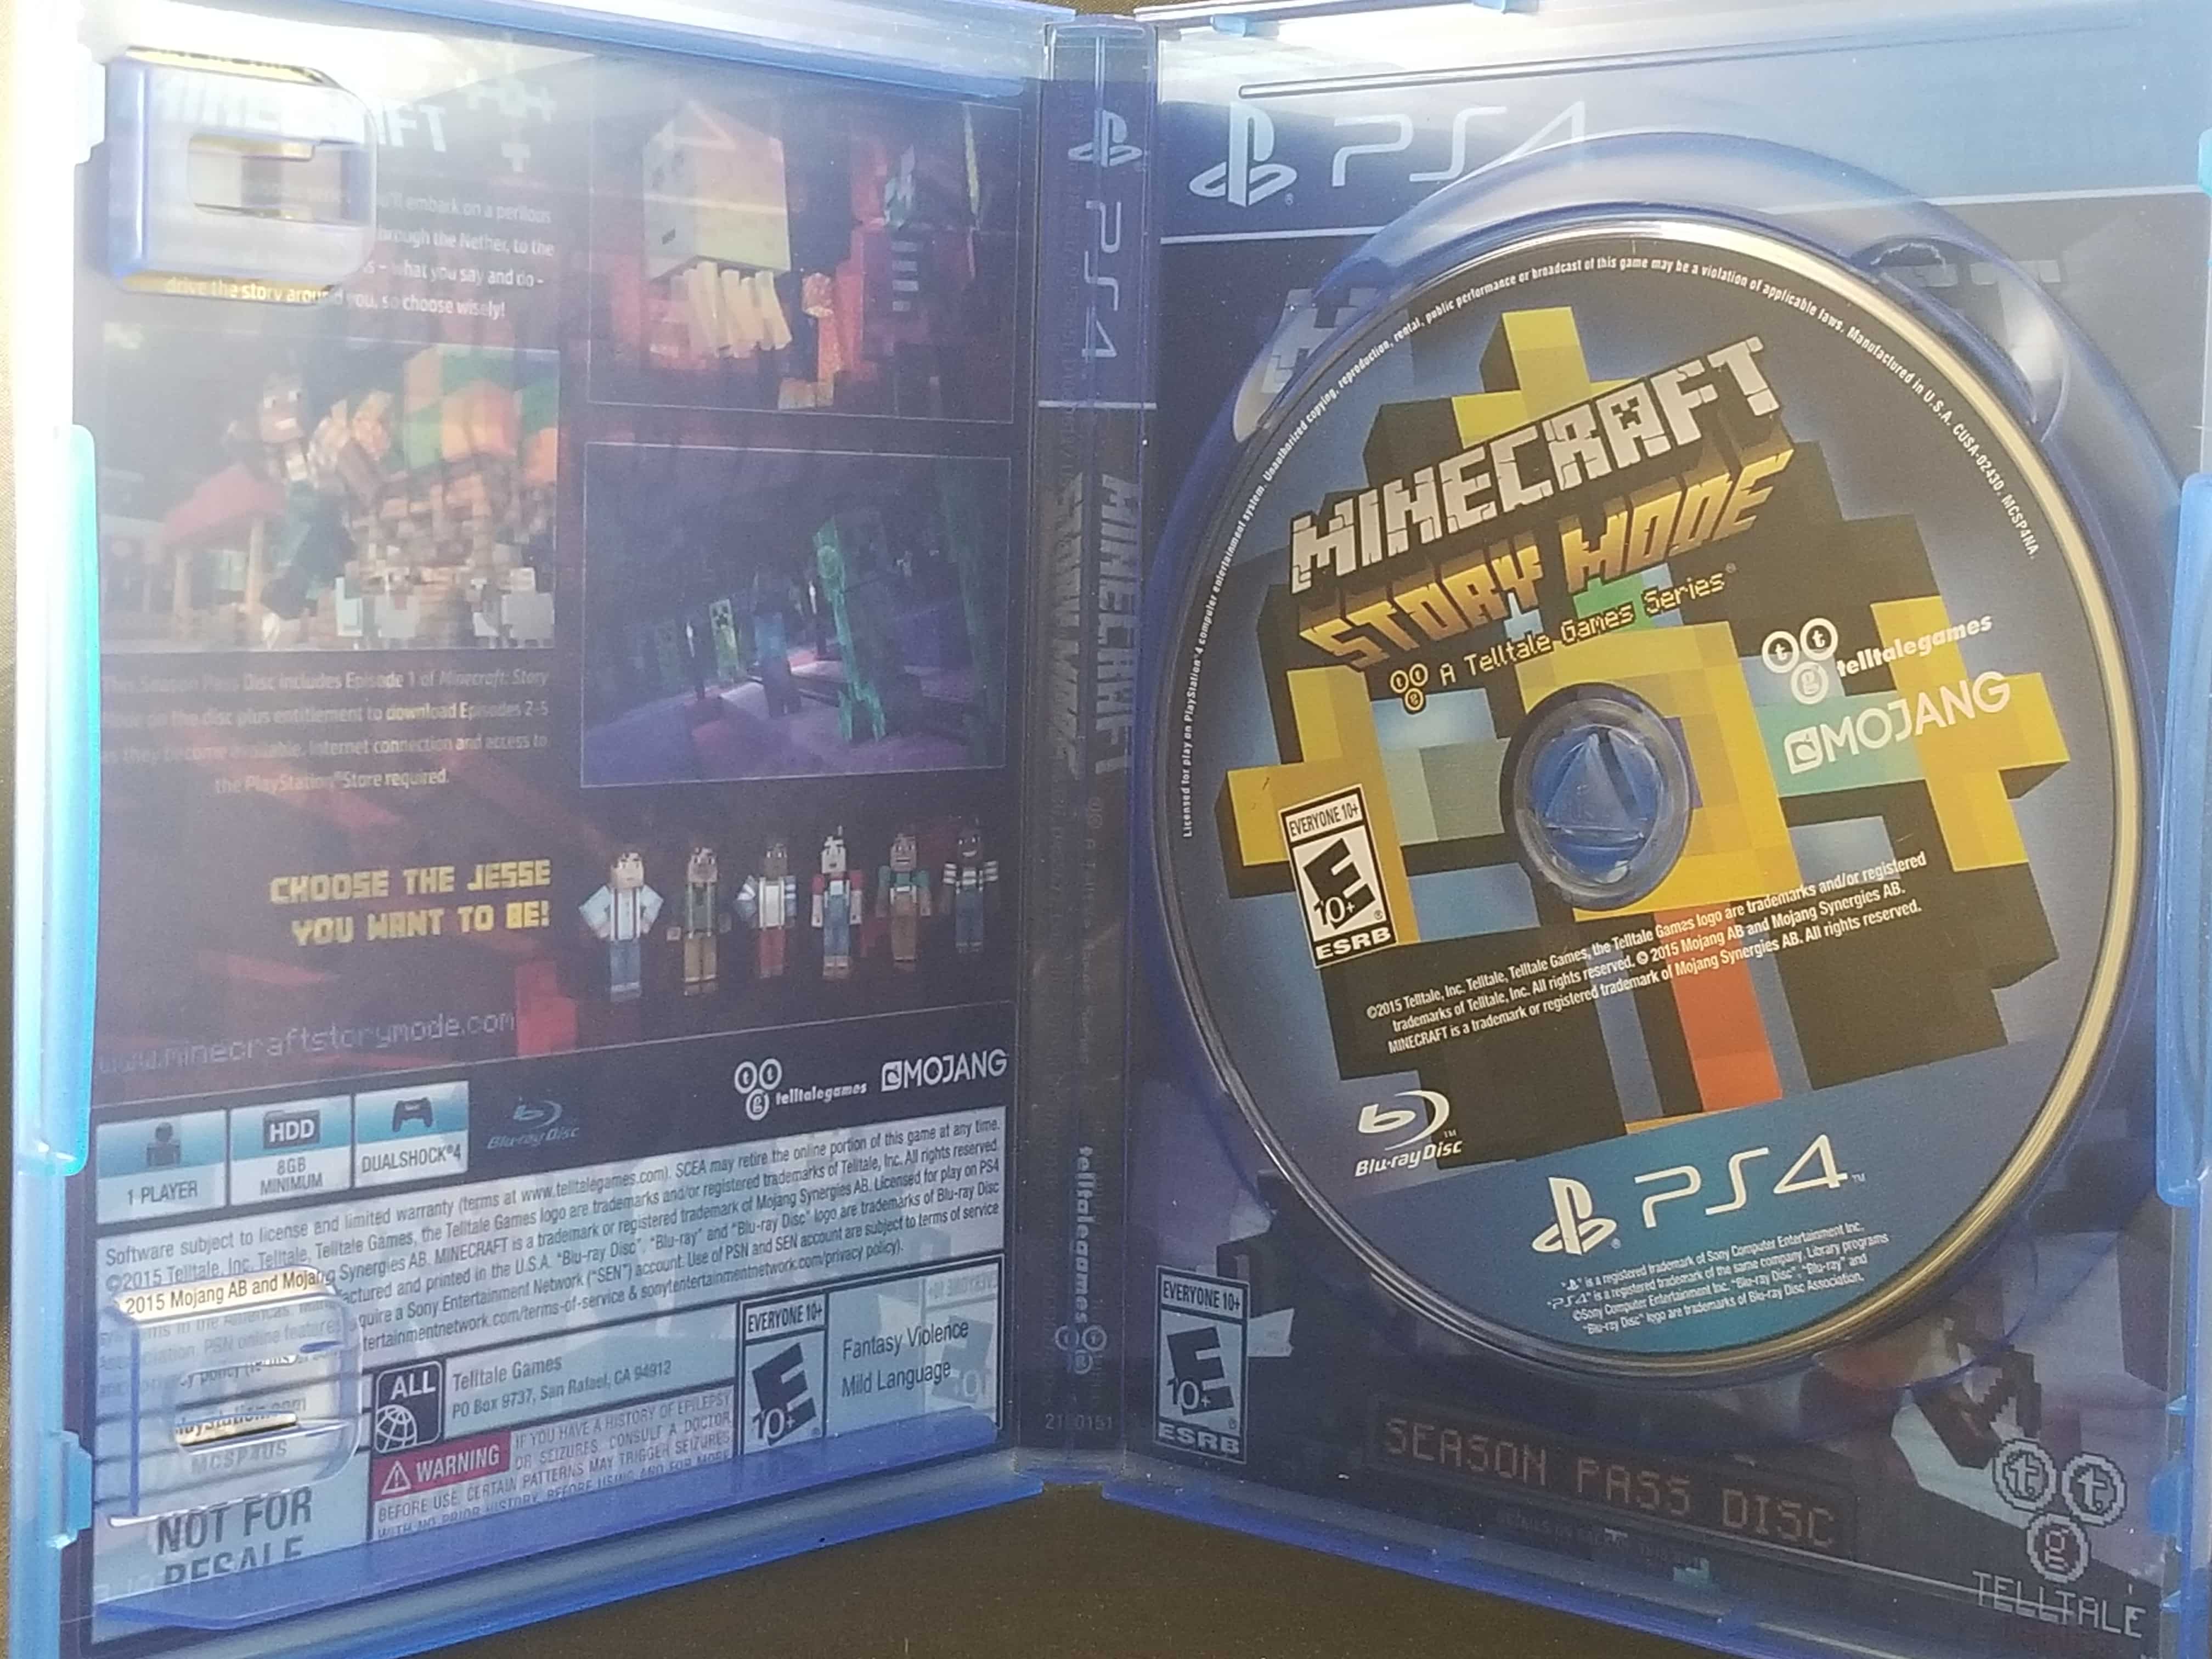  Minecraft: Story Mode - Season Disc - PlayStation 4 : Ui  Entertainment: Video Games